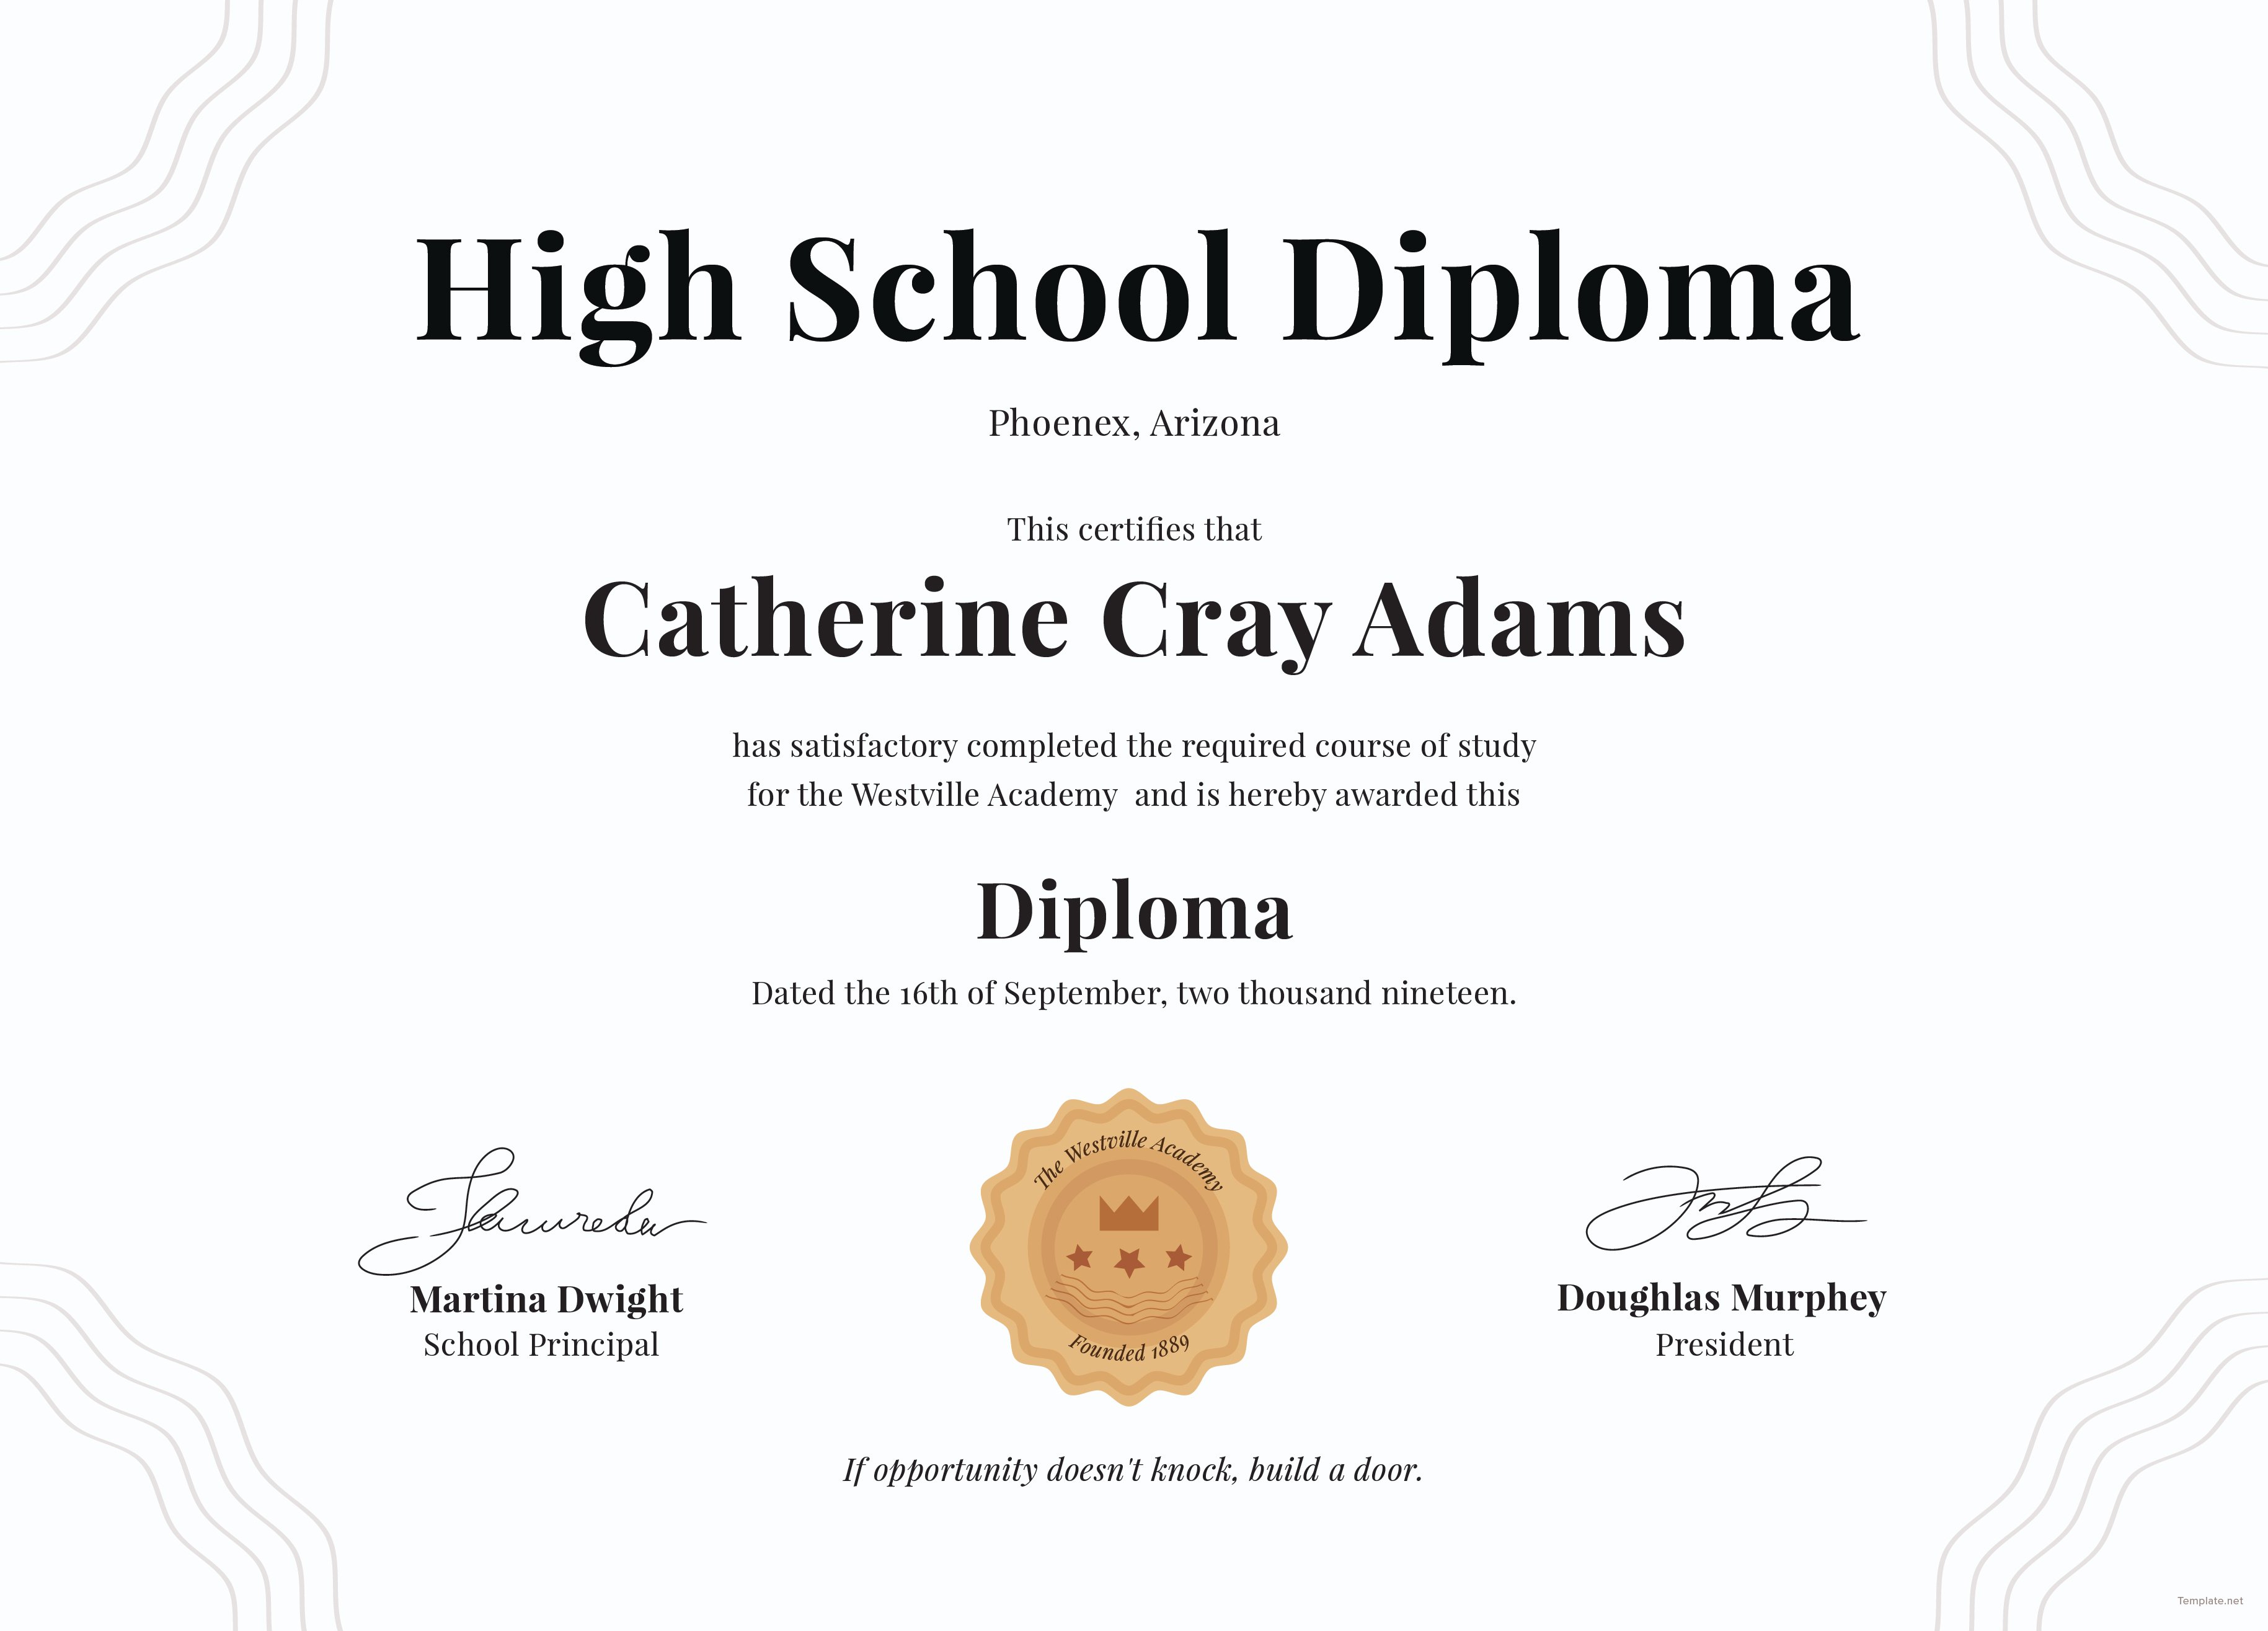 Free High School Diploma Certificate Template in Adobe